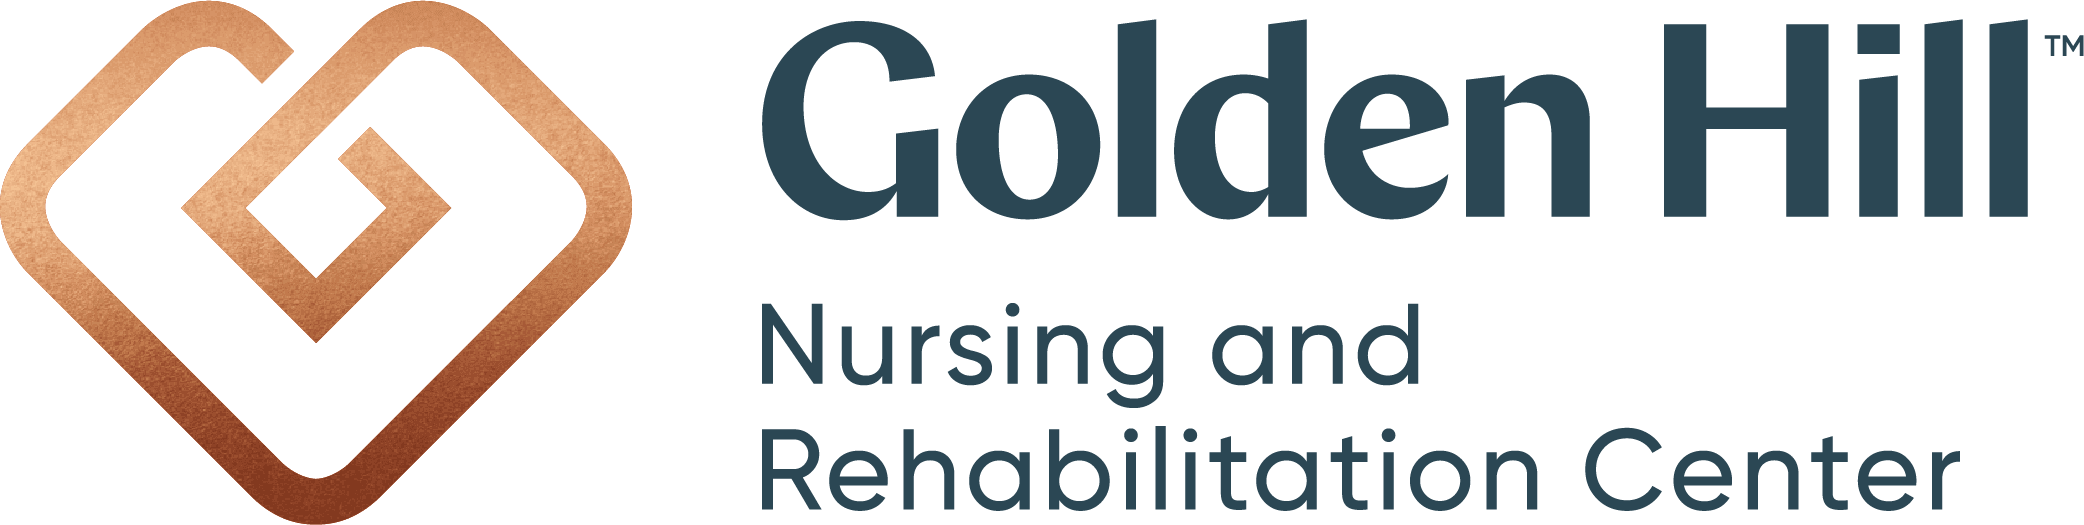 Golden Hill Nursing and Rehabilitation Center Logo